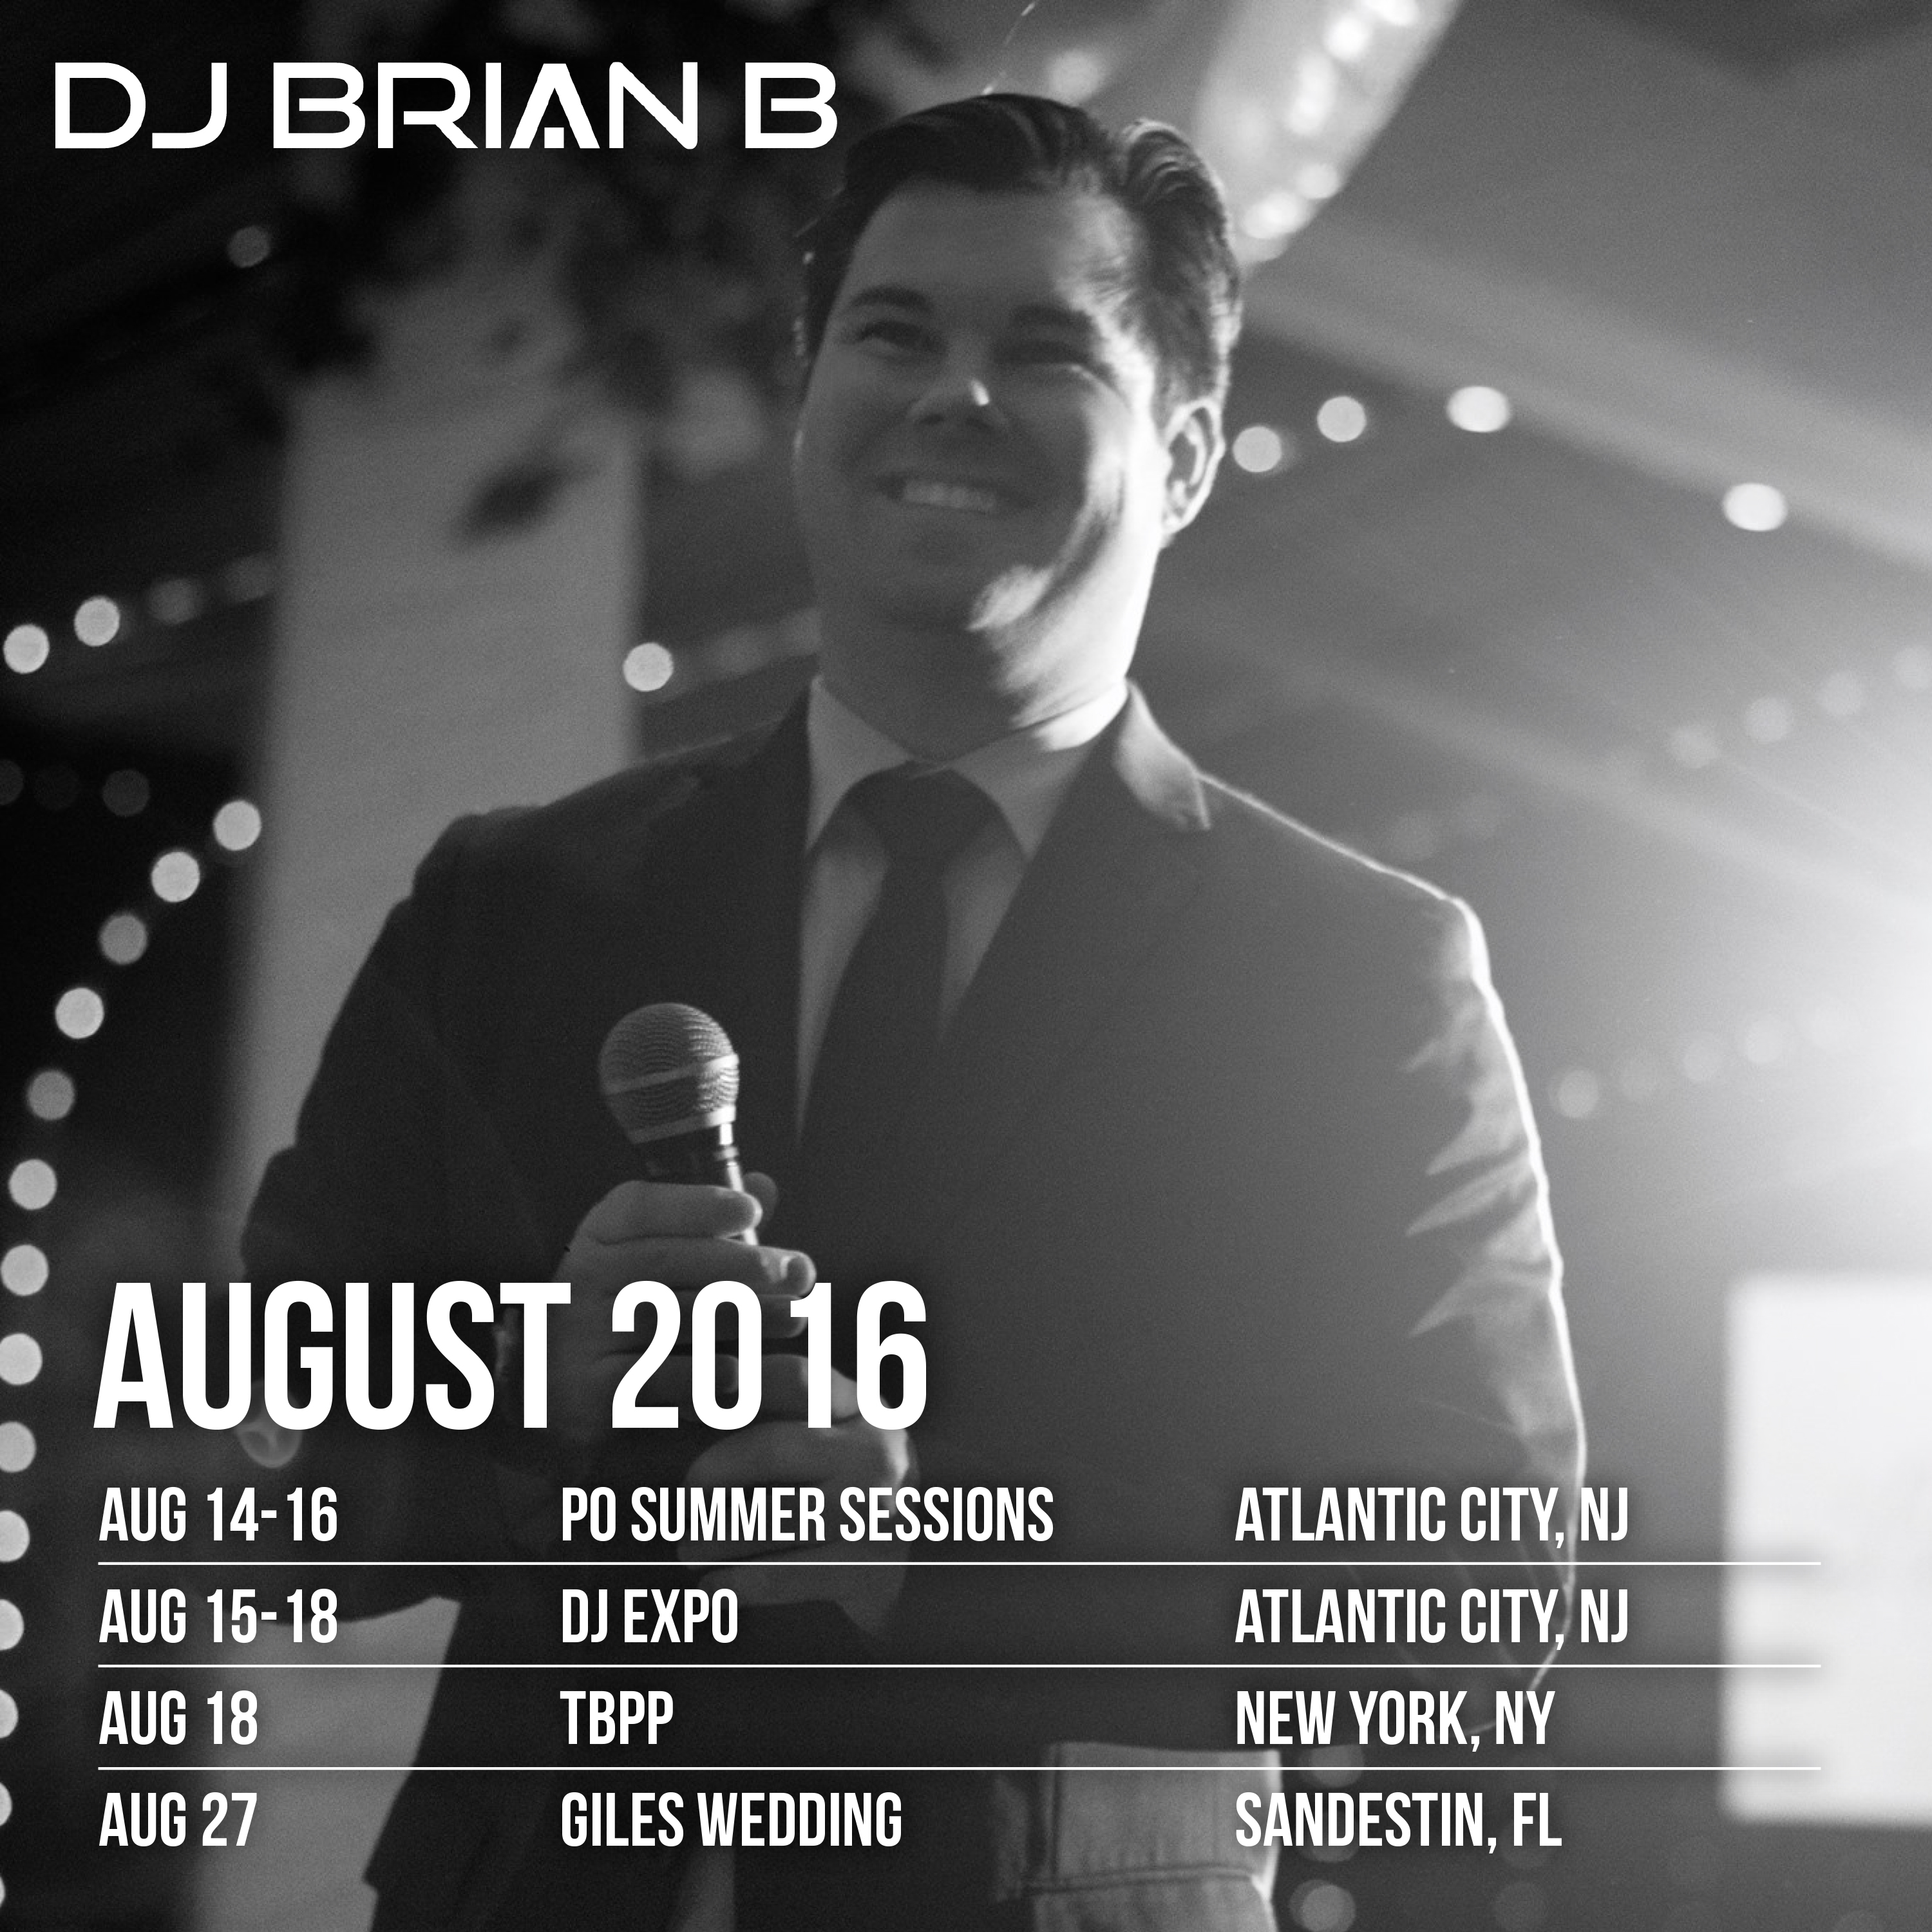 DJ Brian B Official Schedule